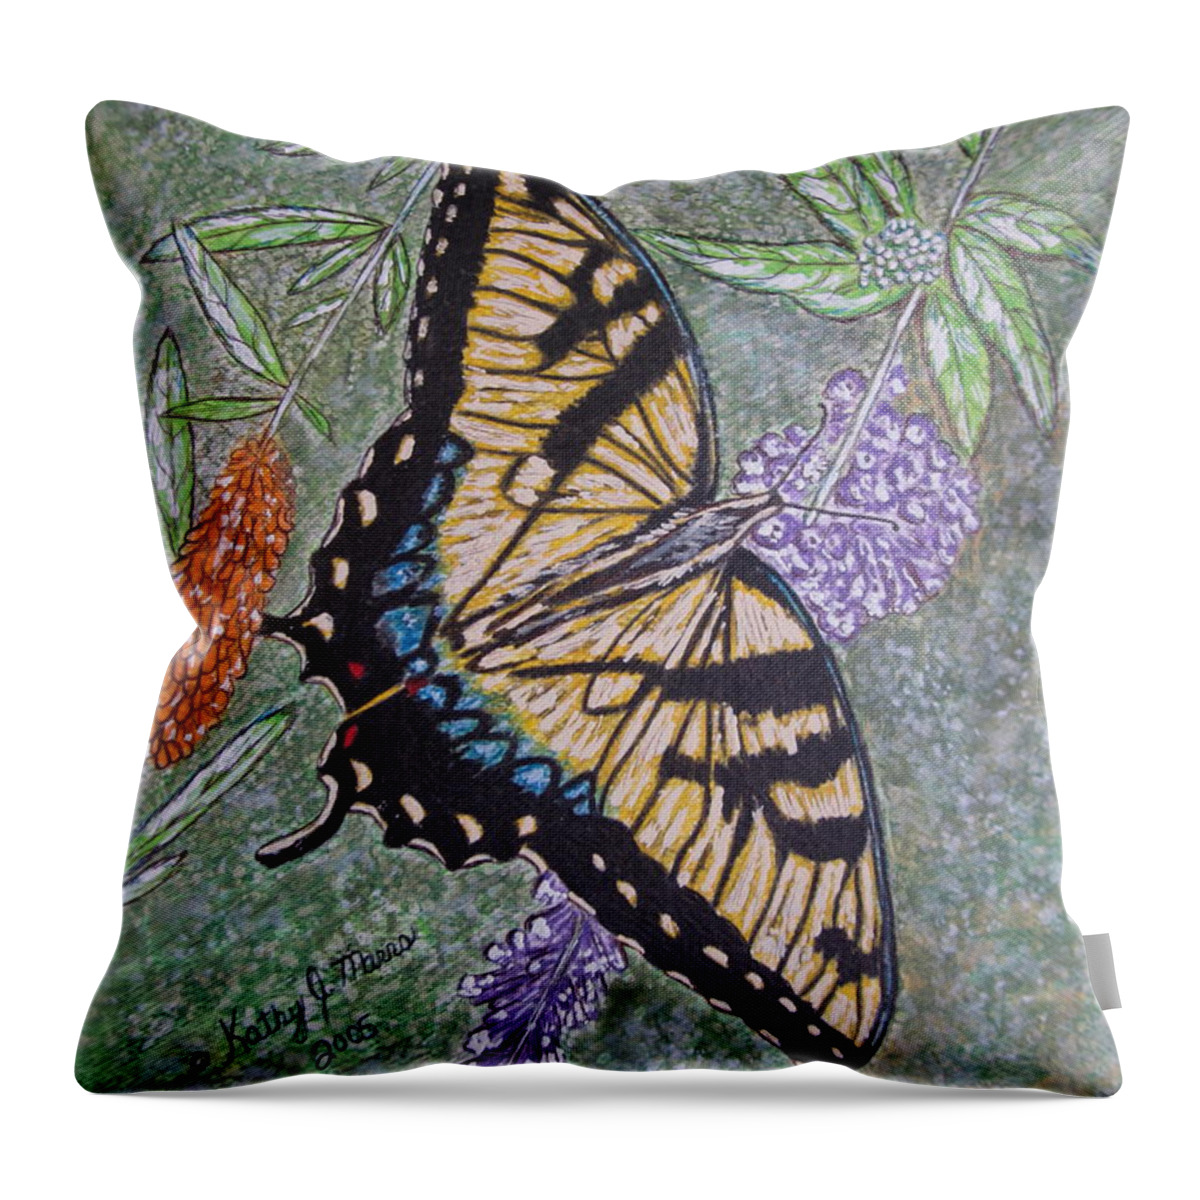 Tiger Swallowtail Butterfly Throw Pillow featuring the painting Tiger Swallowtail Butterfly by Kathy Marrs Chandler